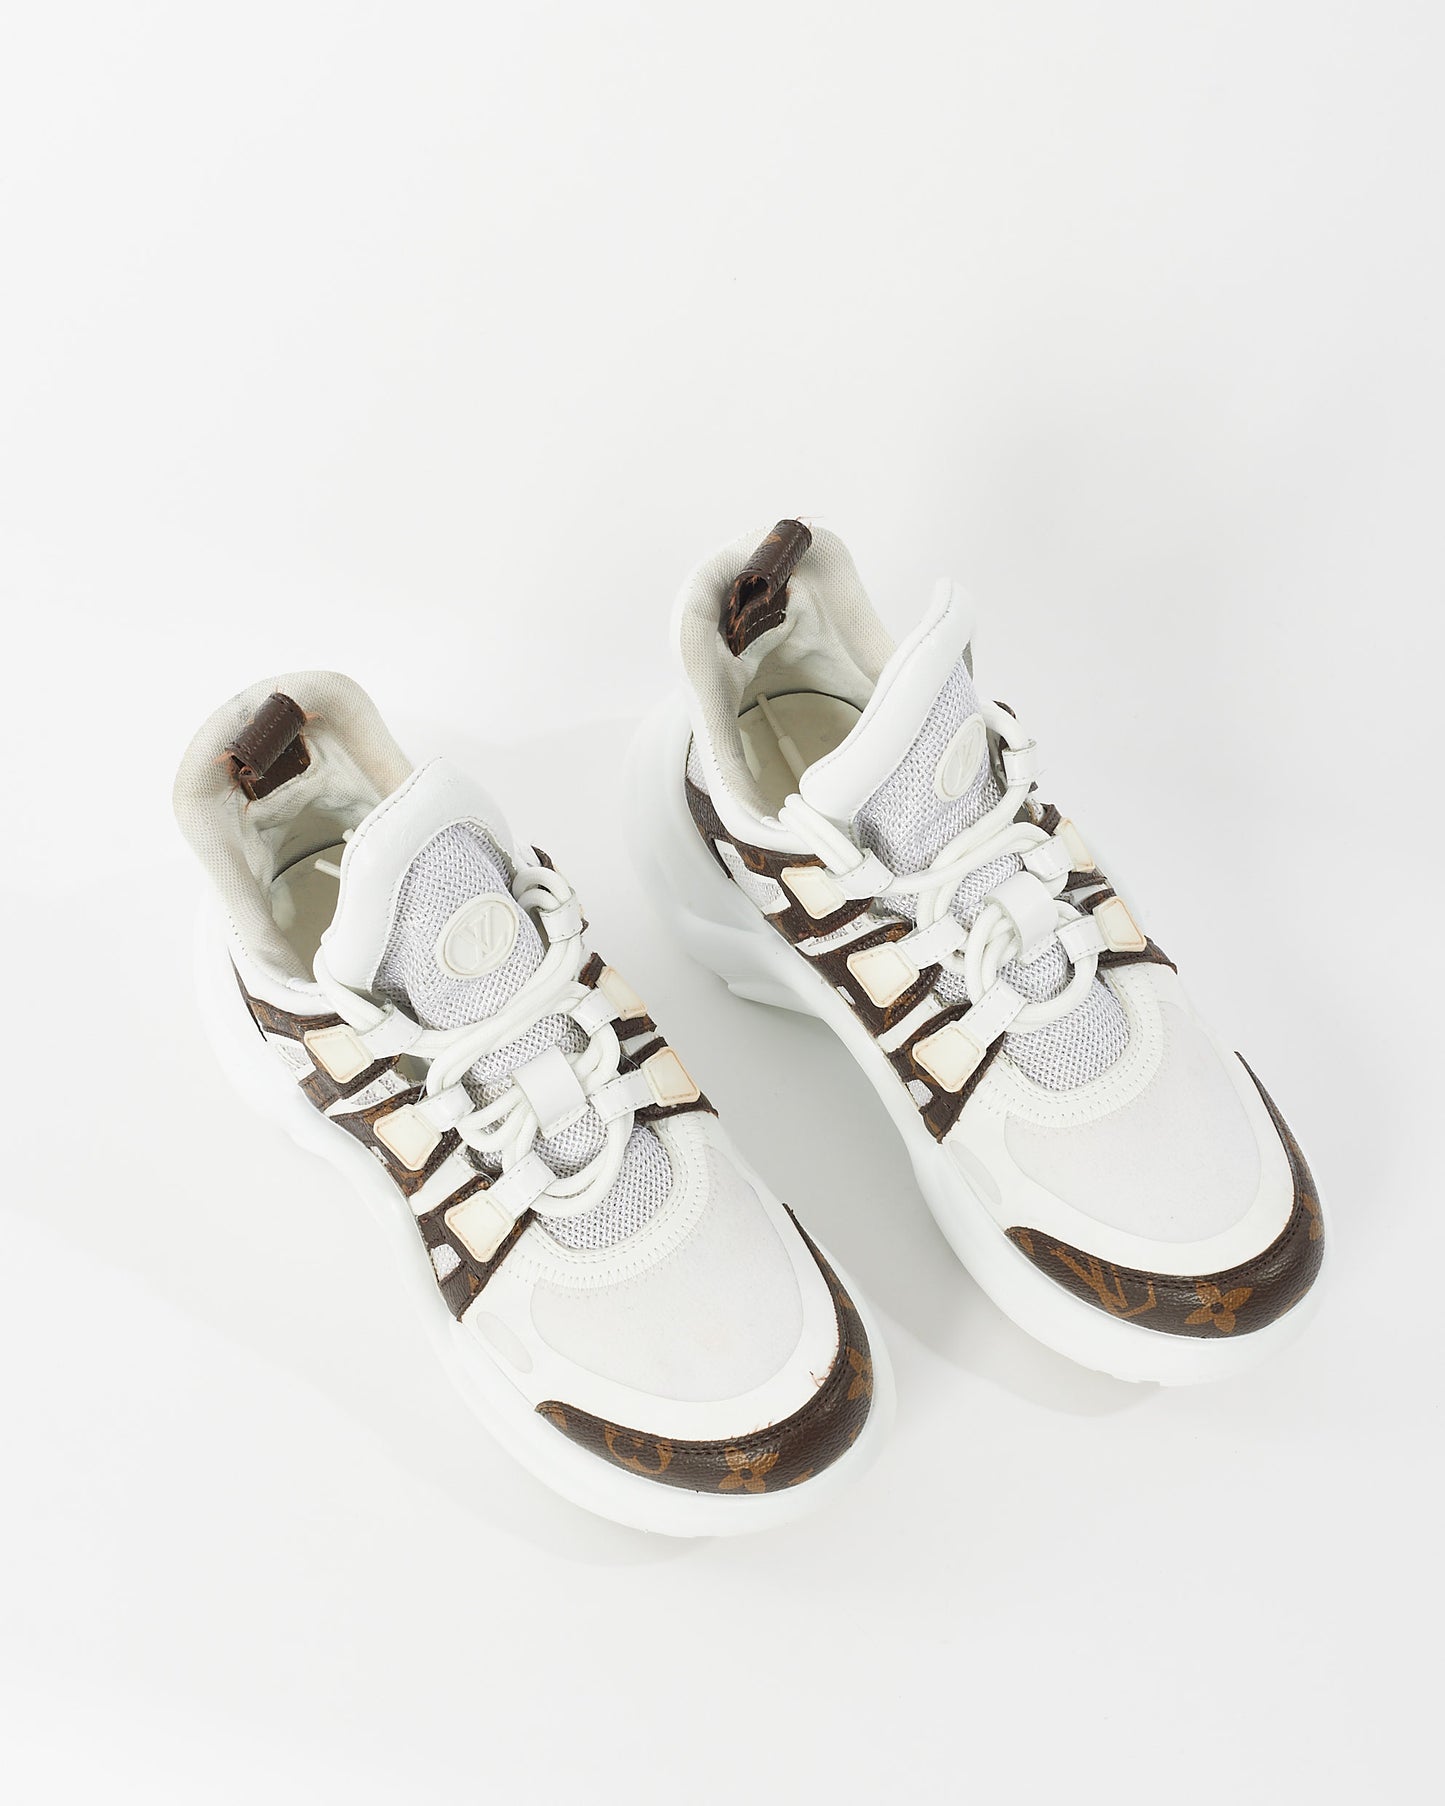 Louis Vuitton White Leather & Monogram Archlight Sneakers - 36